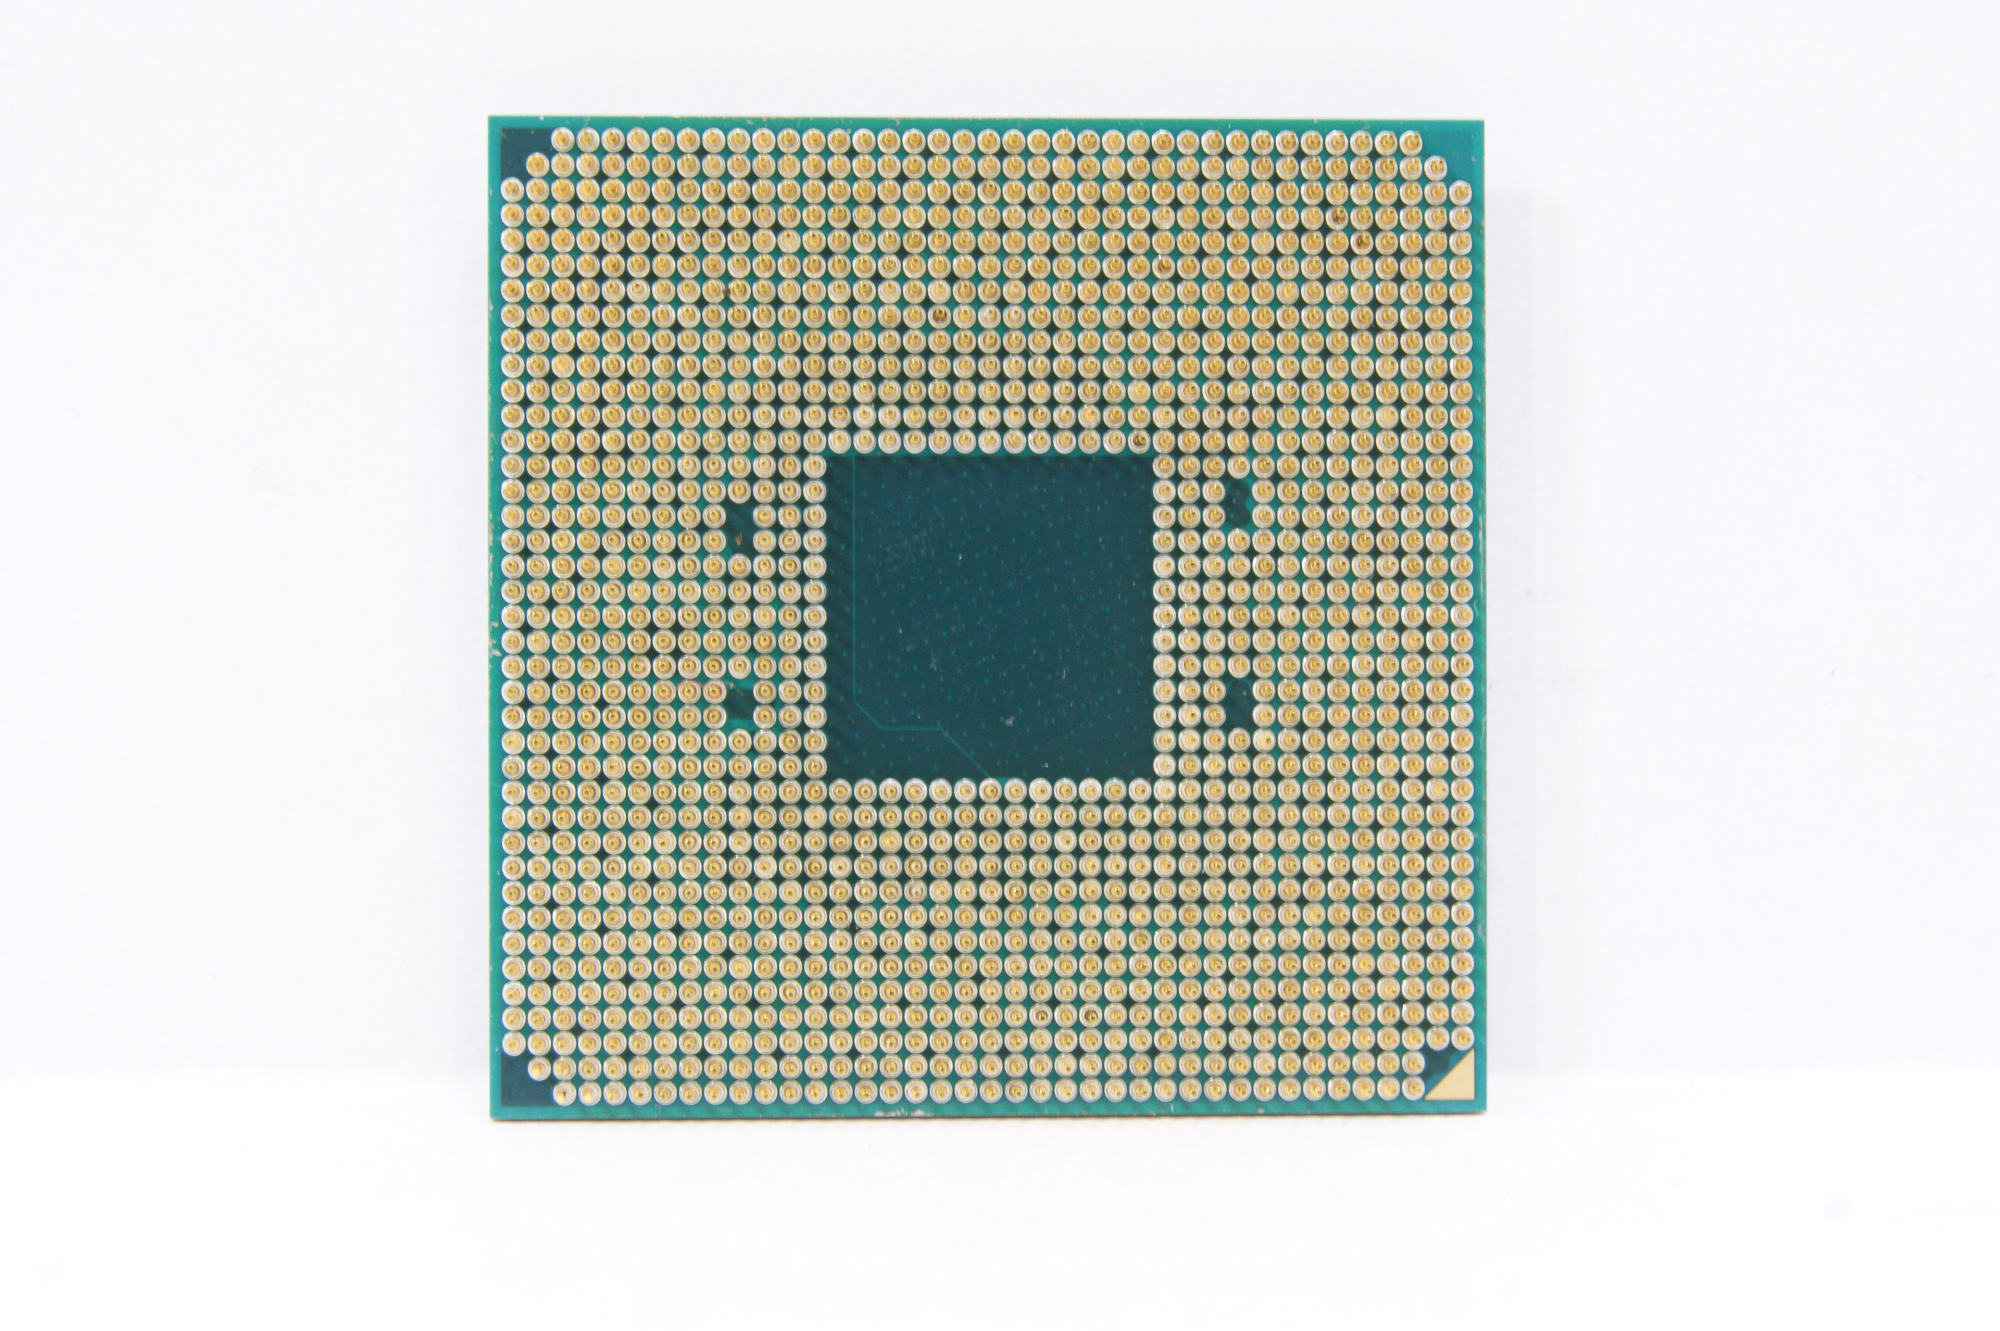 2650 сокет. Процессор AMD Ryzen 5 2400g. Am4 сокет. AMD am4 процессоры. Процессор AMD Ryzen 5 Pro 2400g.